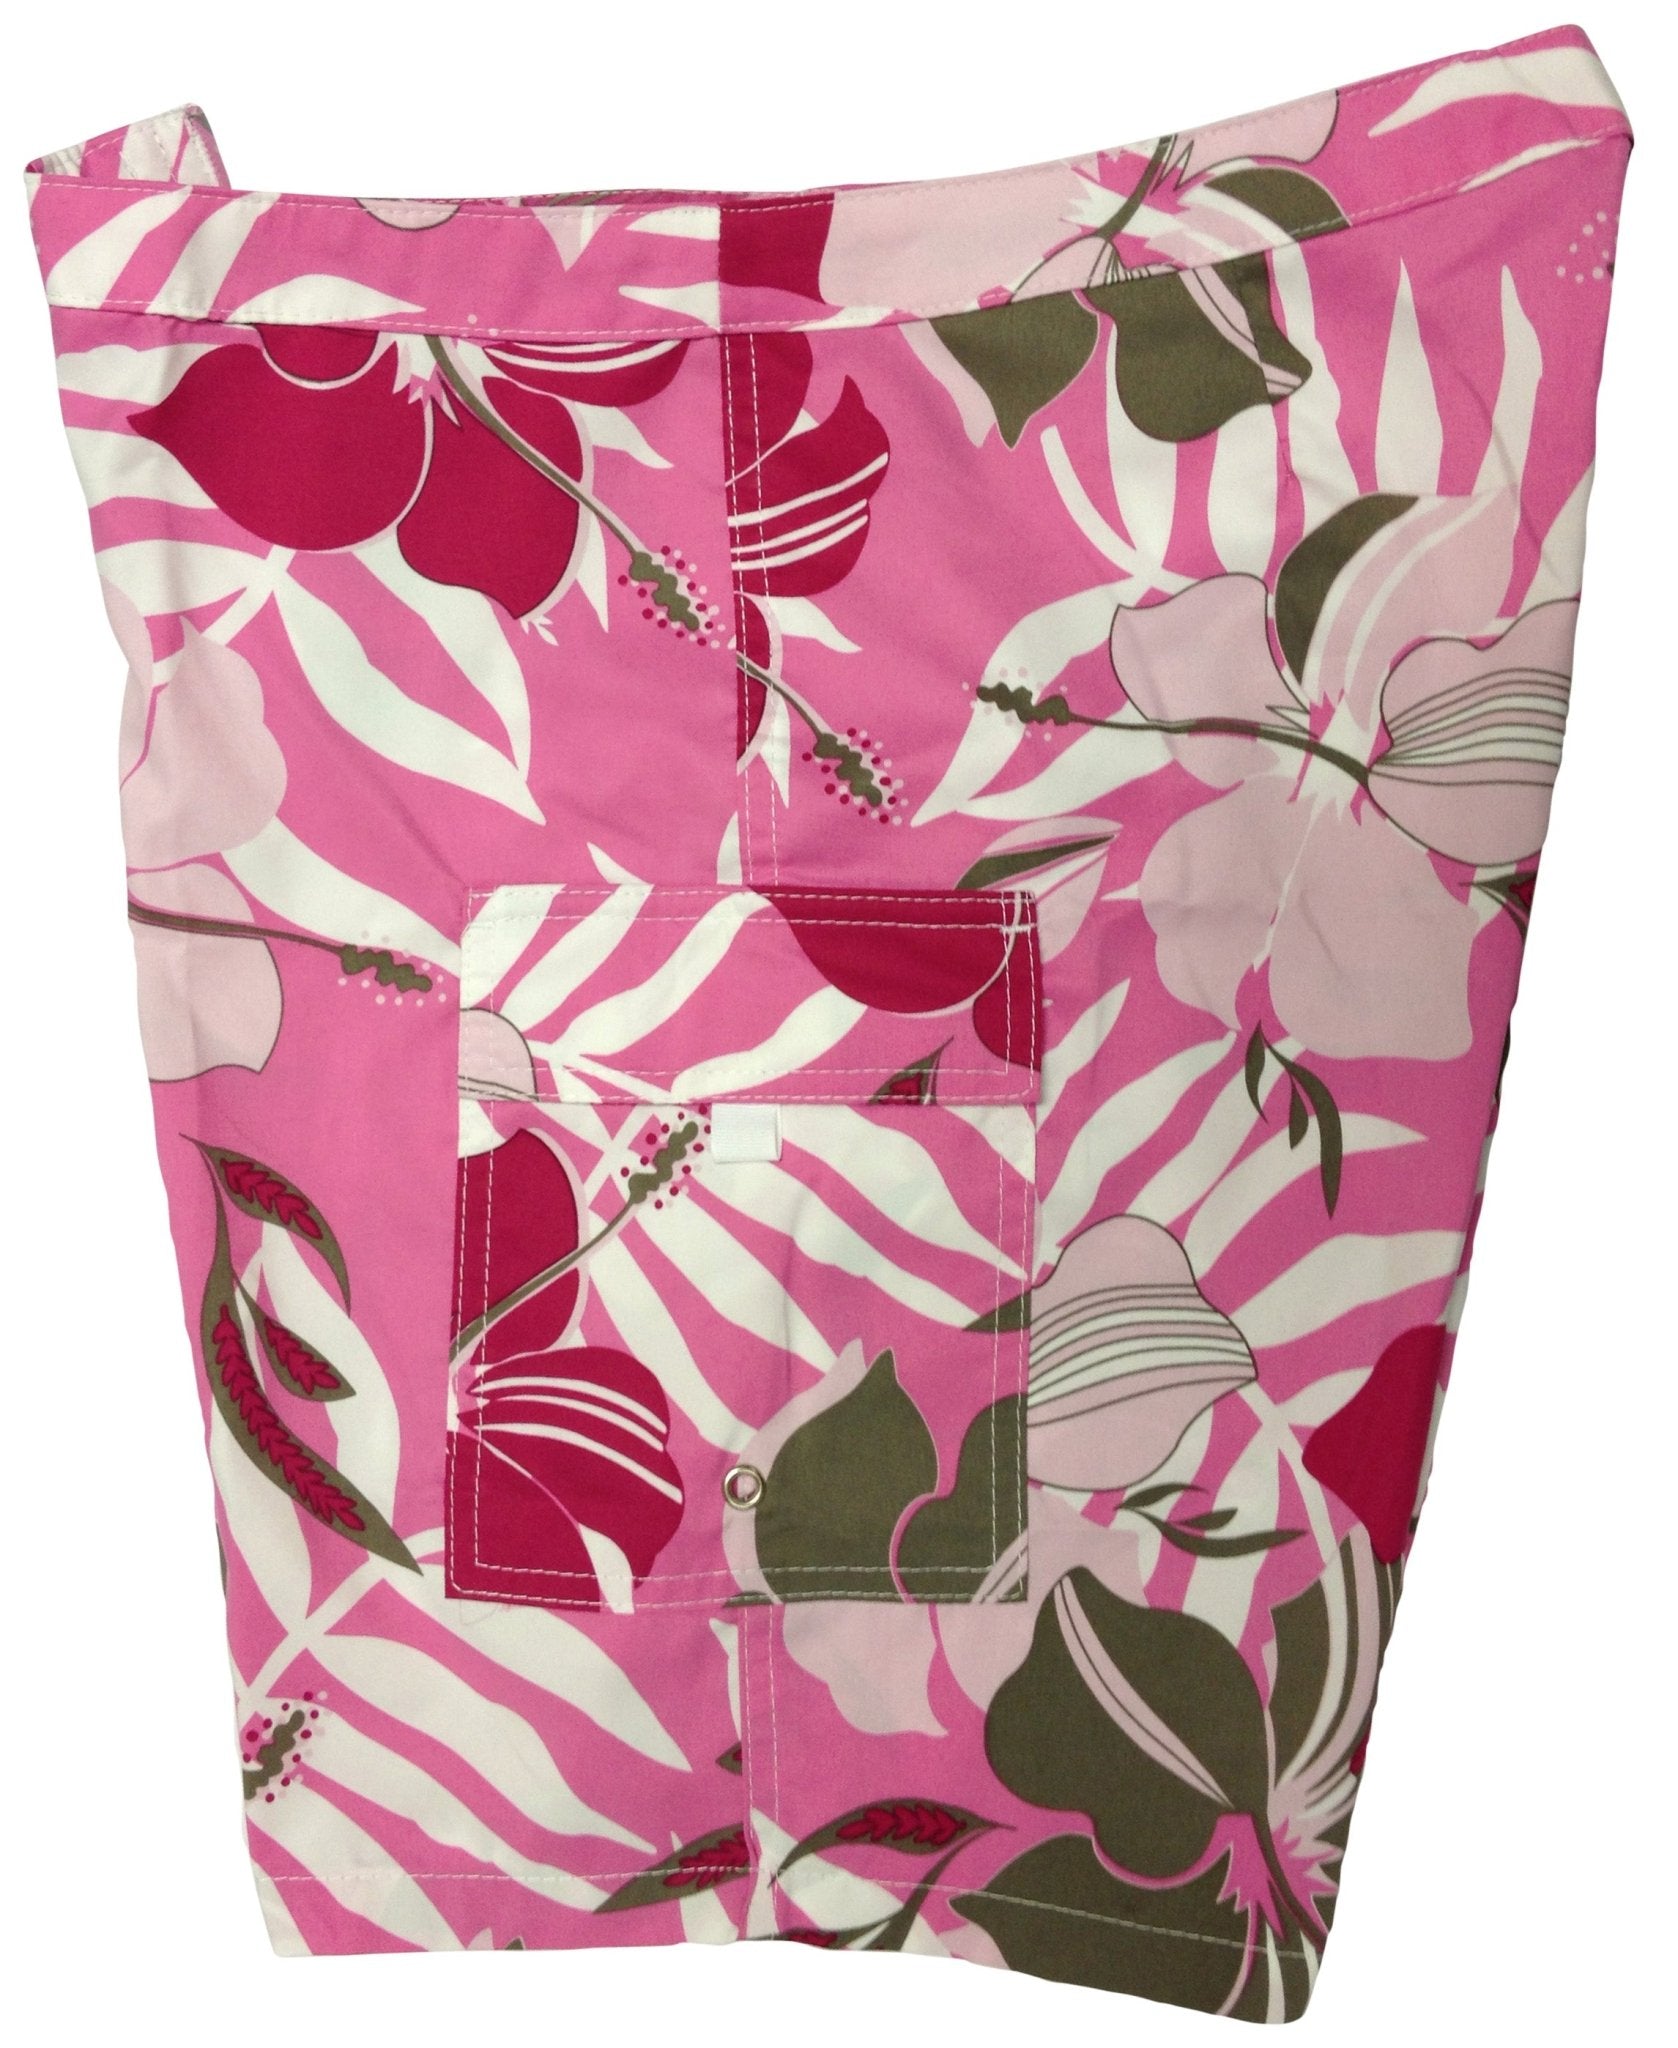 "Gypsy Soul" (Pink) Womens Board/Swim Shorts - 11" - Board Shorts World Outlet